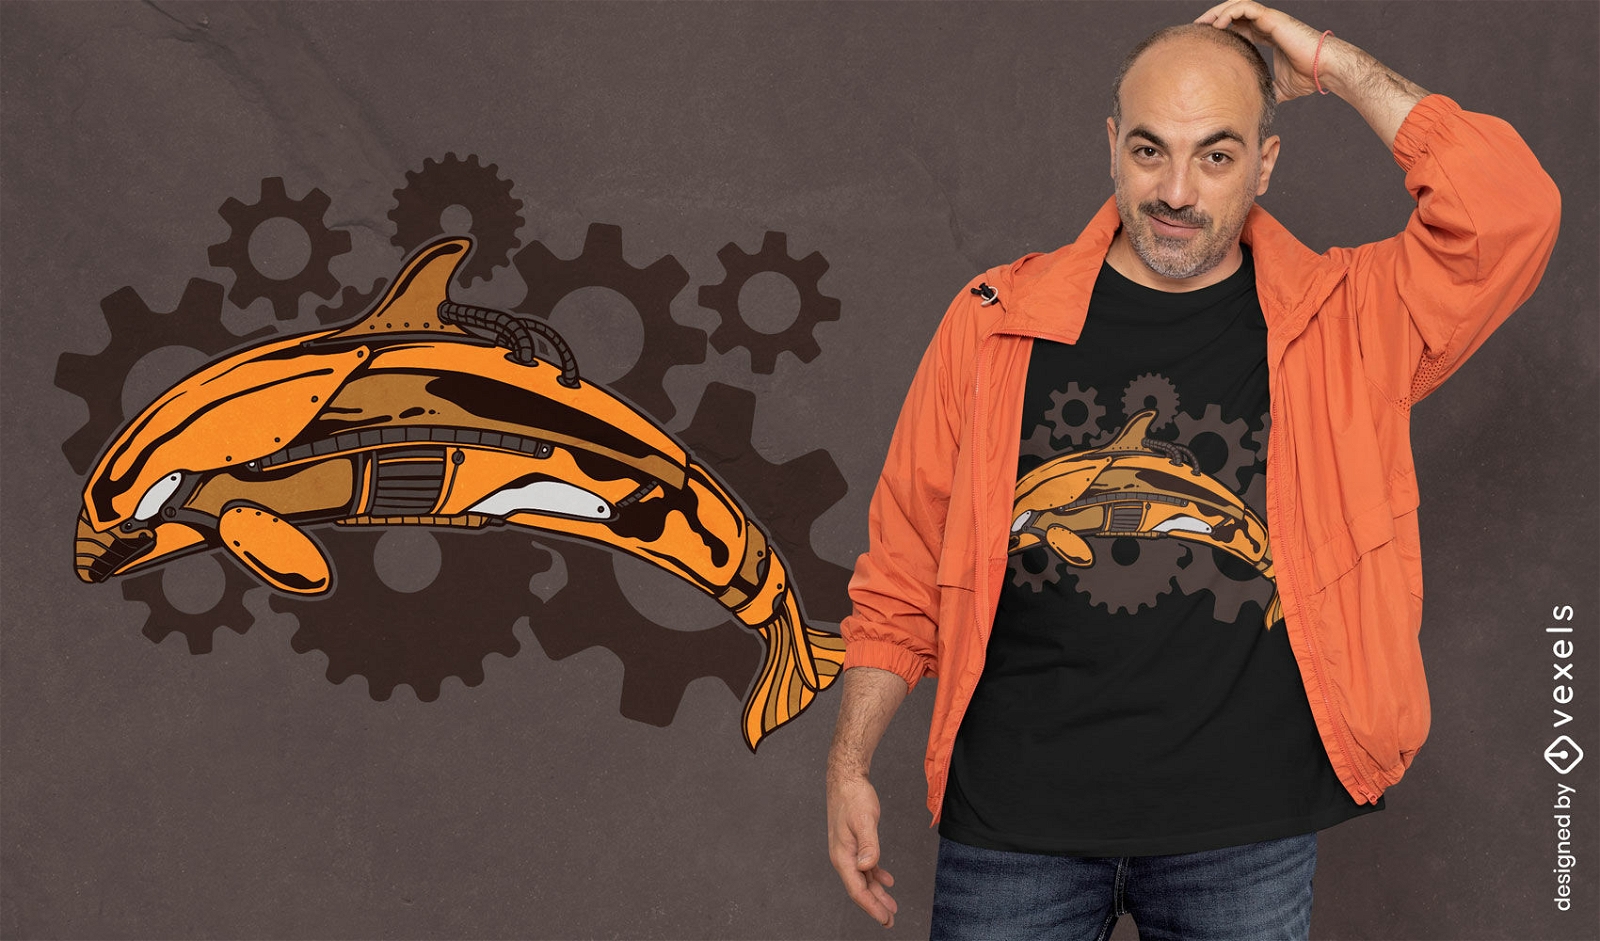 Killerwal mechanisches Tier-T-Shirt-Design